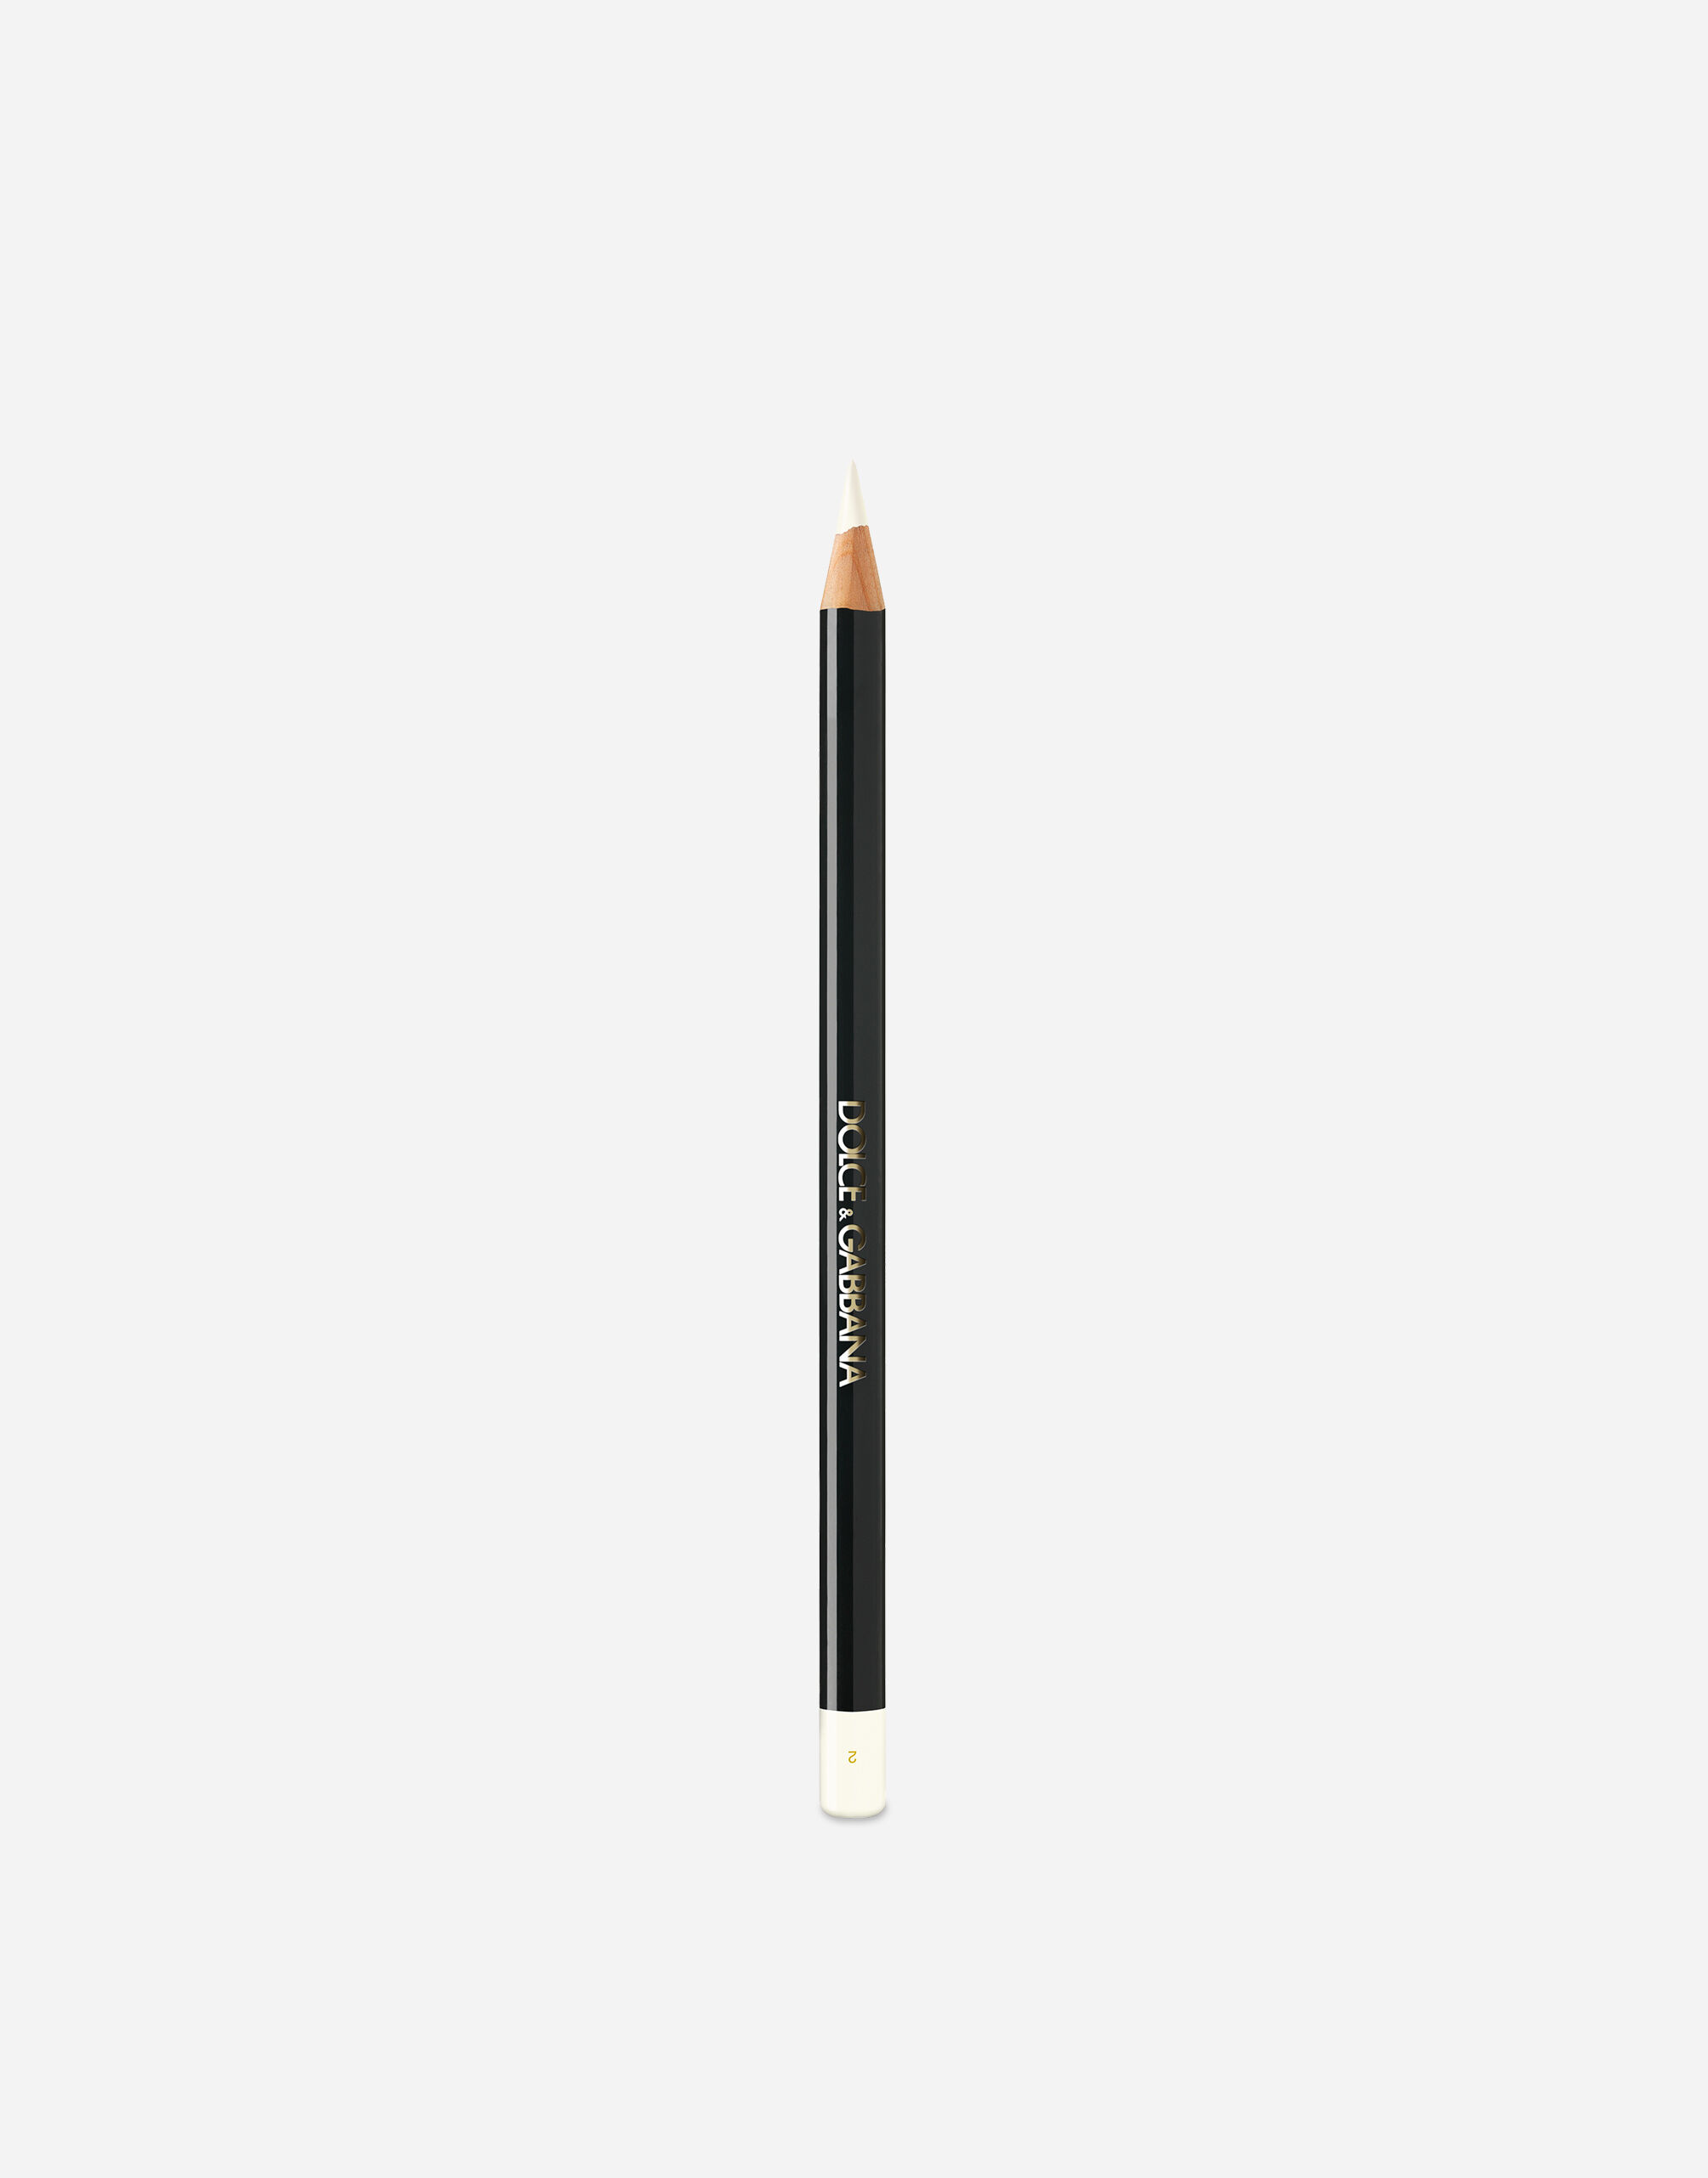 Карандаш-кайал для глаз DOLCE & GABBANA Khol Pencil стойкий, тон 2 True White, 2,04 г карандаш для век с аппликатором pupa multiplay eye pencil тон 01 icy white 244001